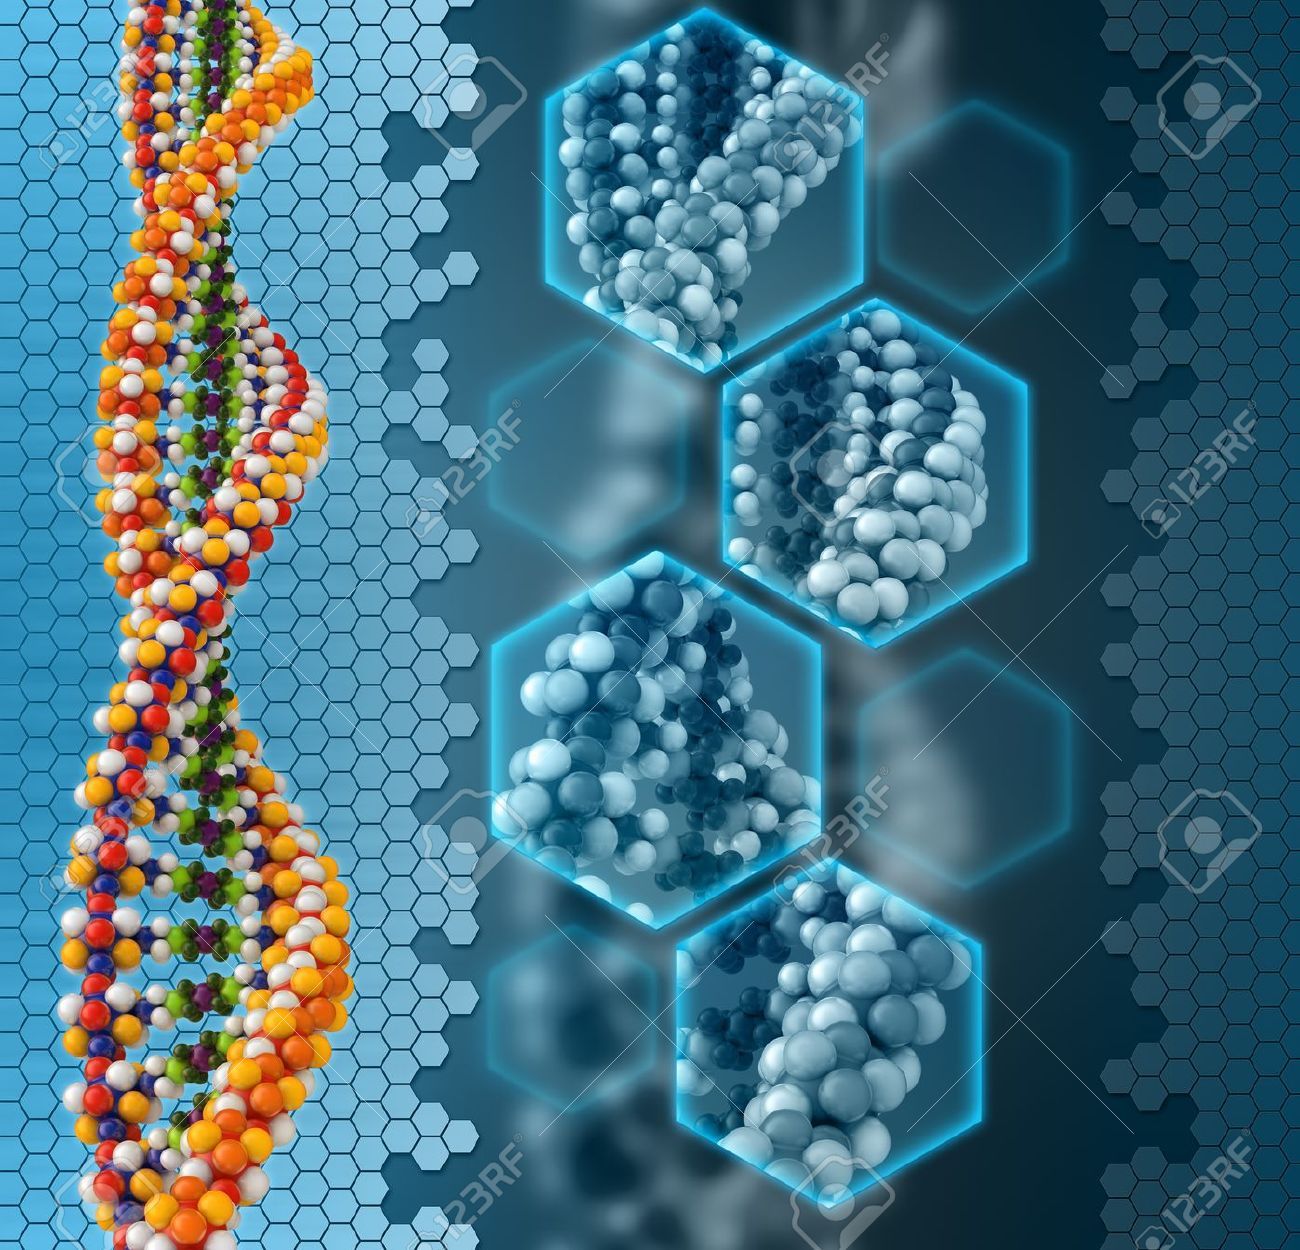 Biochemistry Full HD Quality Wallpaper, Widescreen Wallpaper